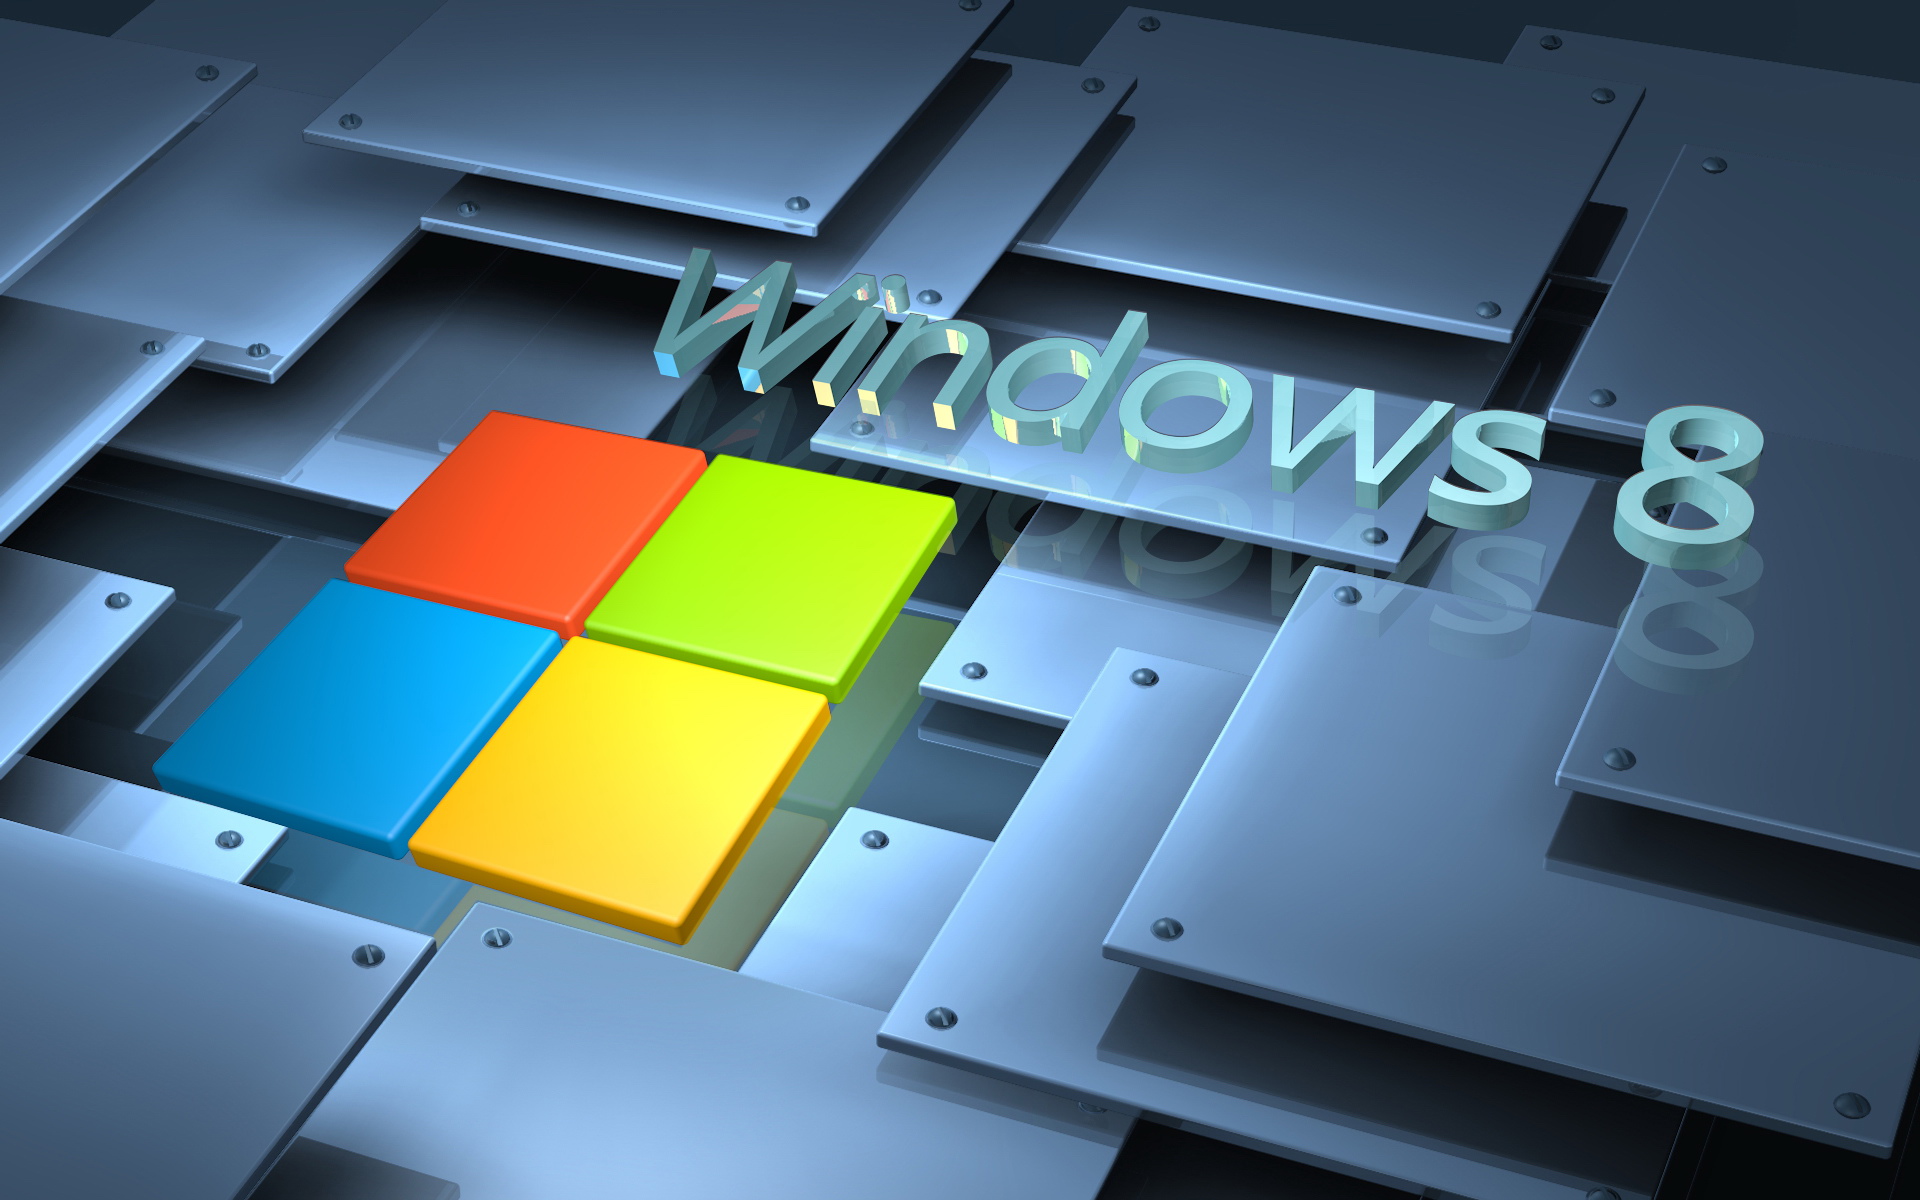 Windows 8 3D HD Wallpapers - Wallpaper Cave